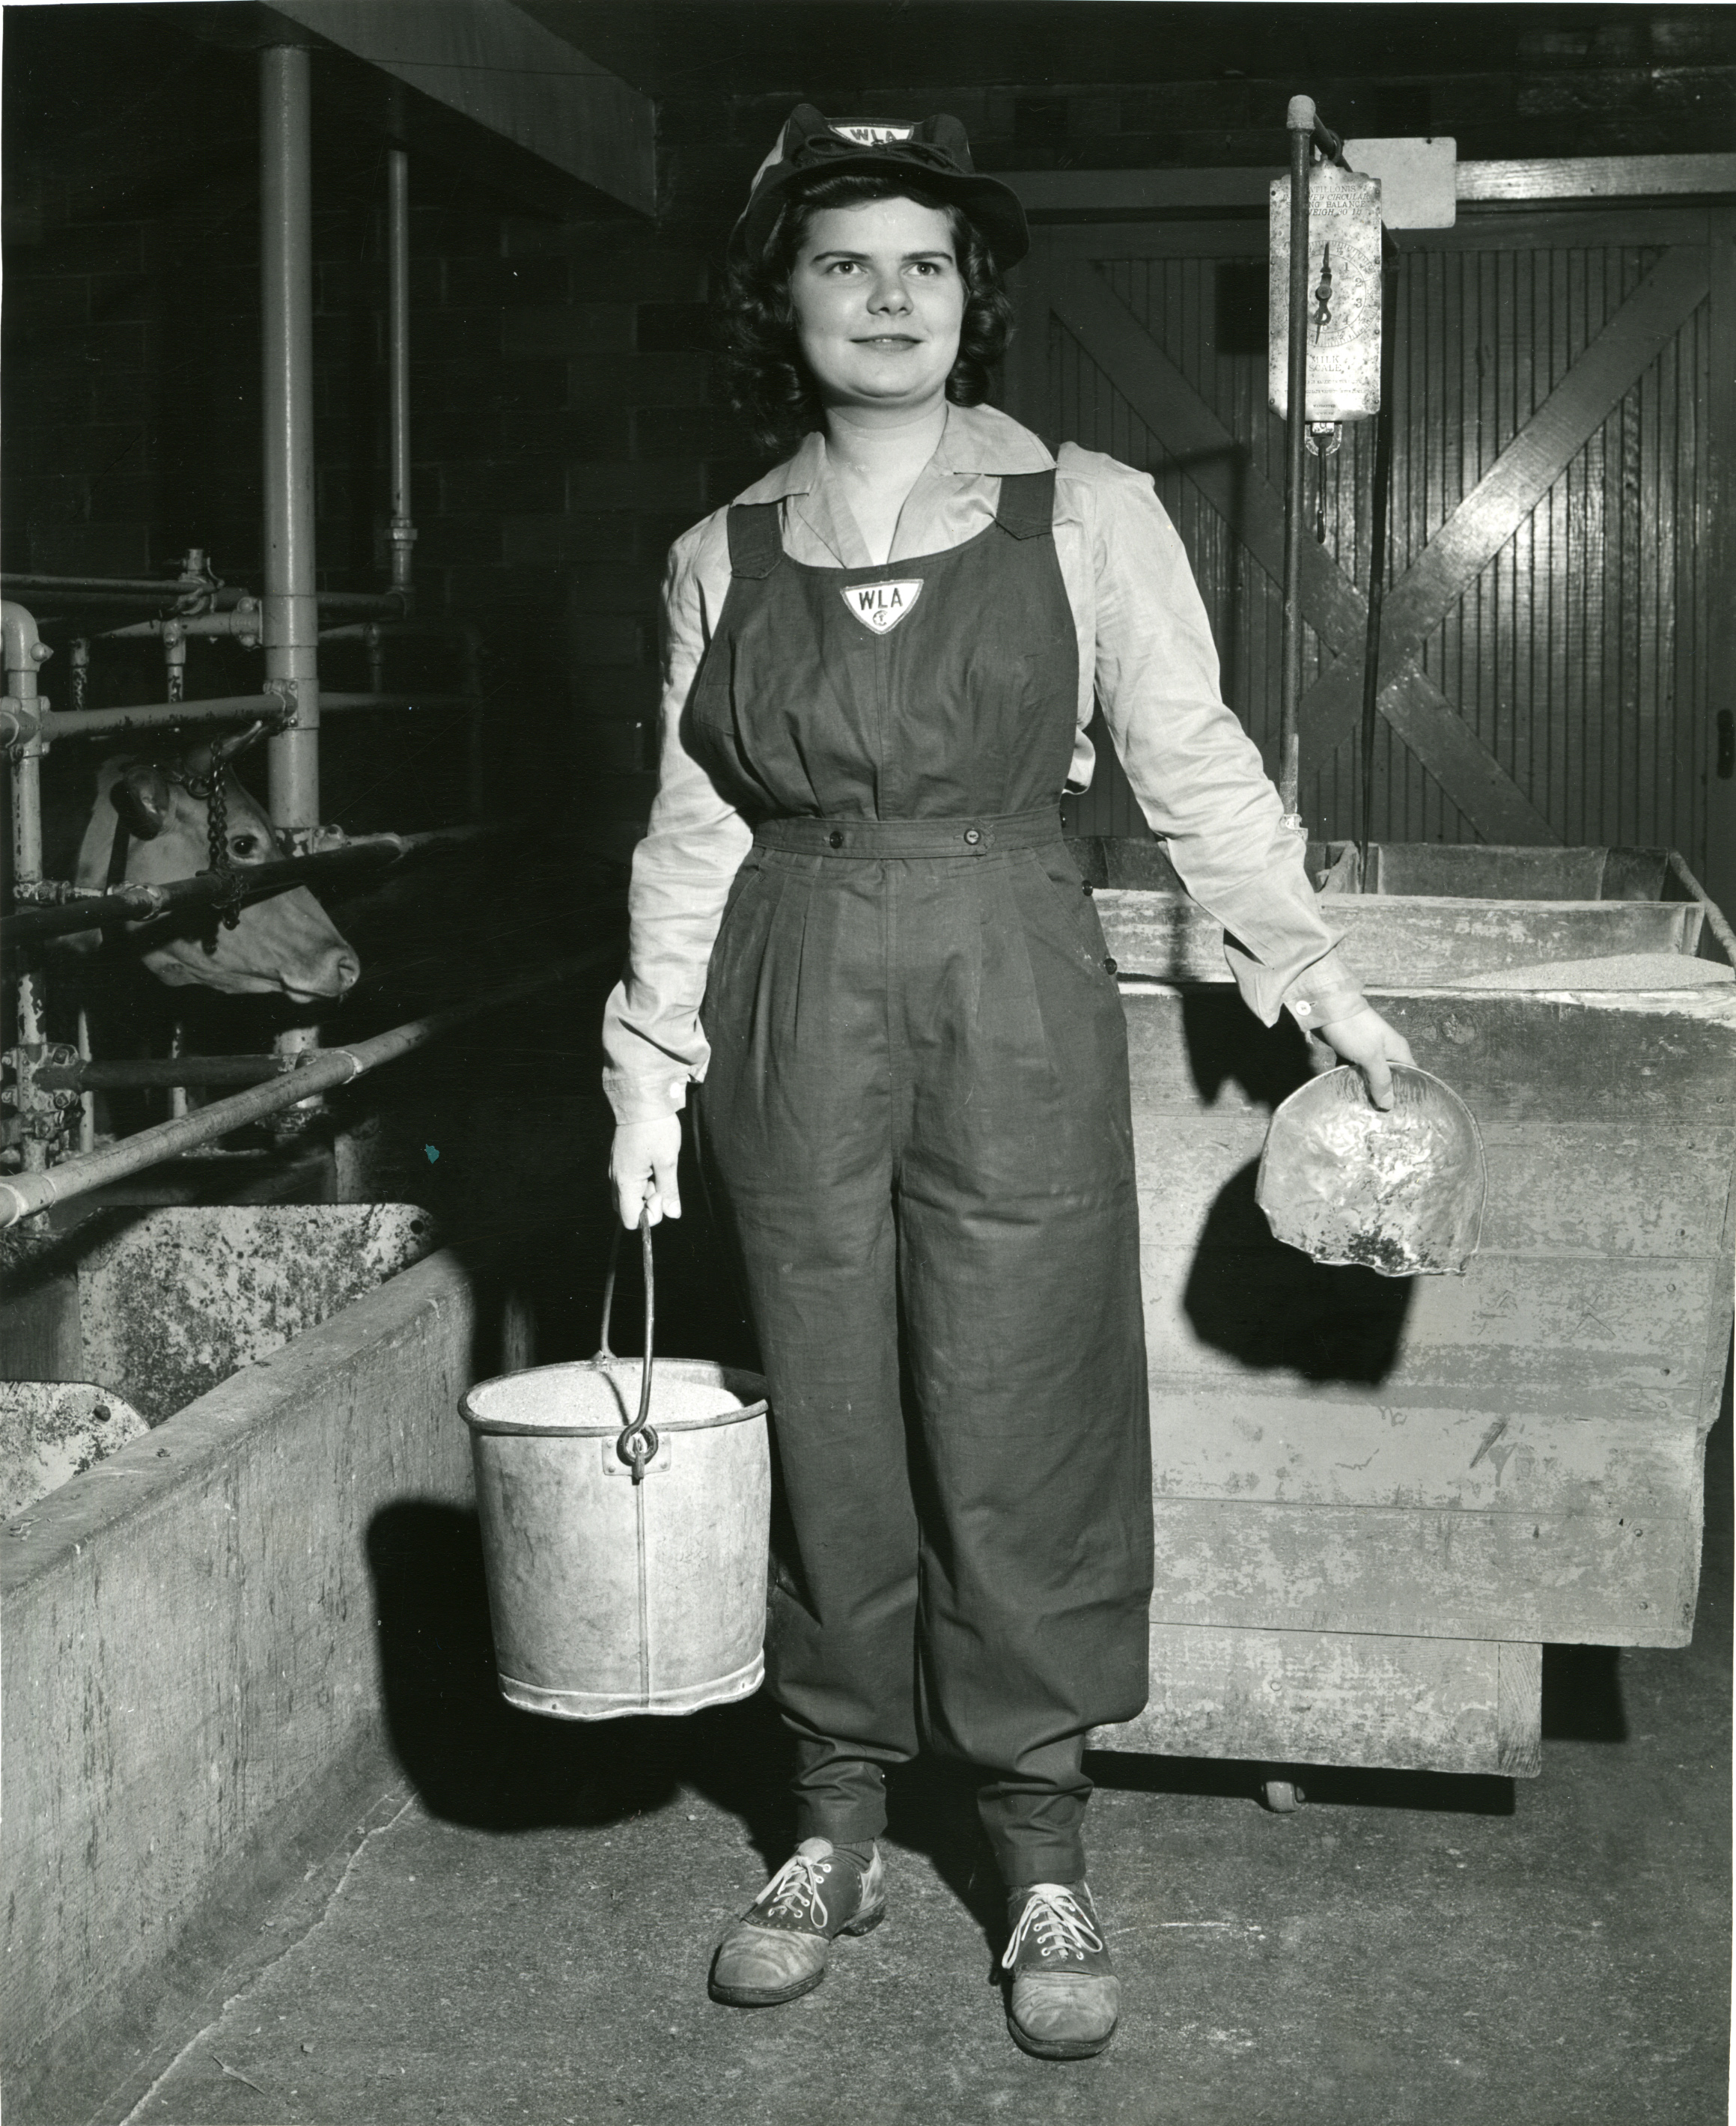 Woman feeding cows, February 1944